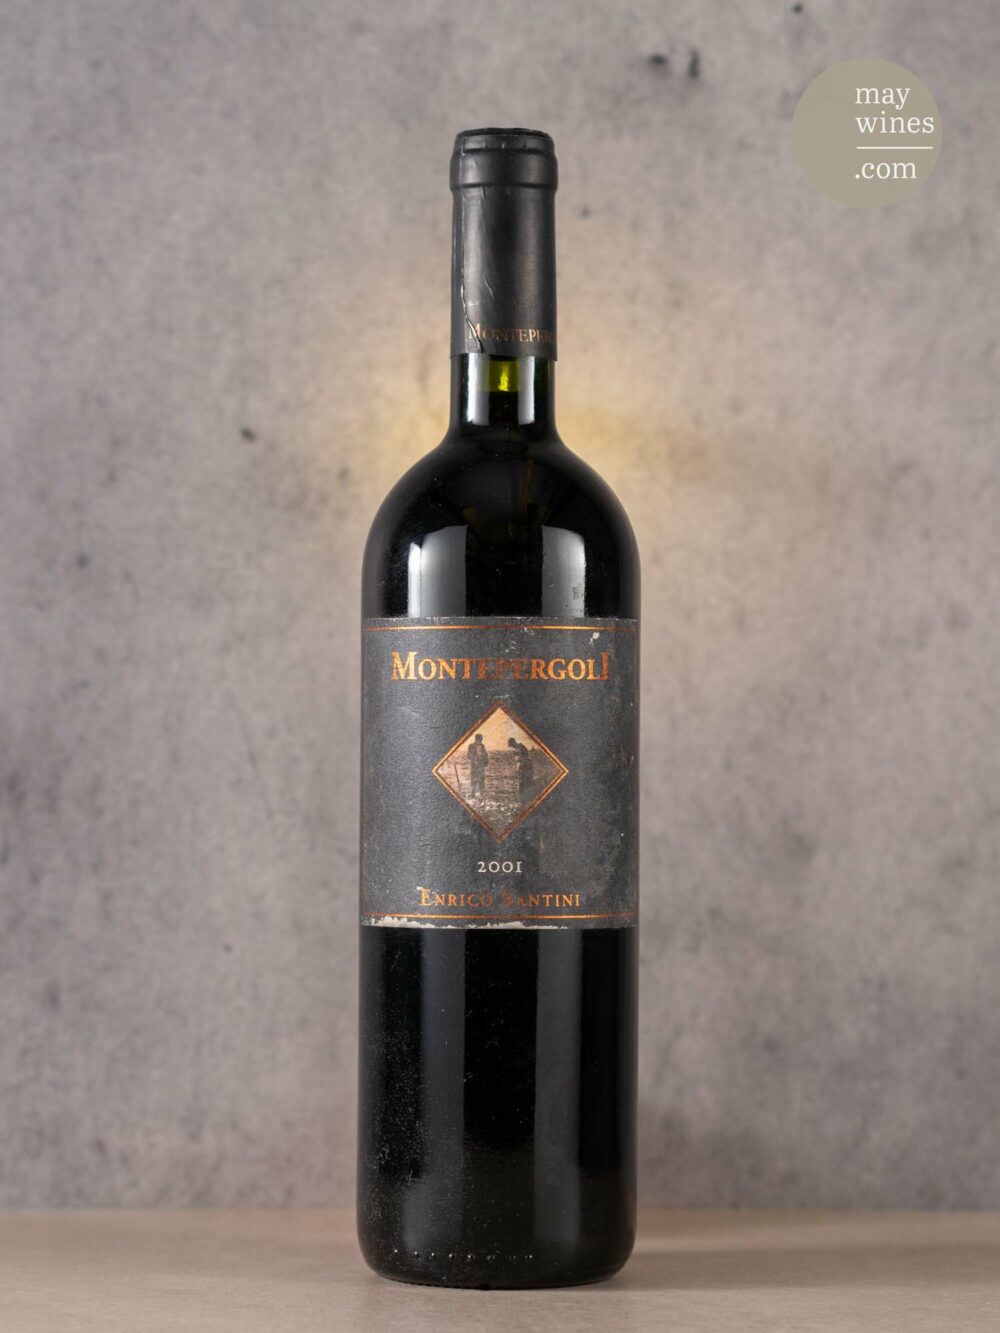 May Wines – Rotwein – 2001 Montepergoli Bolgheri Rosso - Enrico Santini